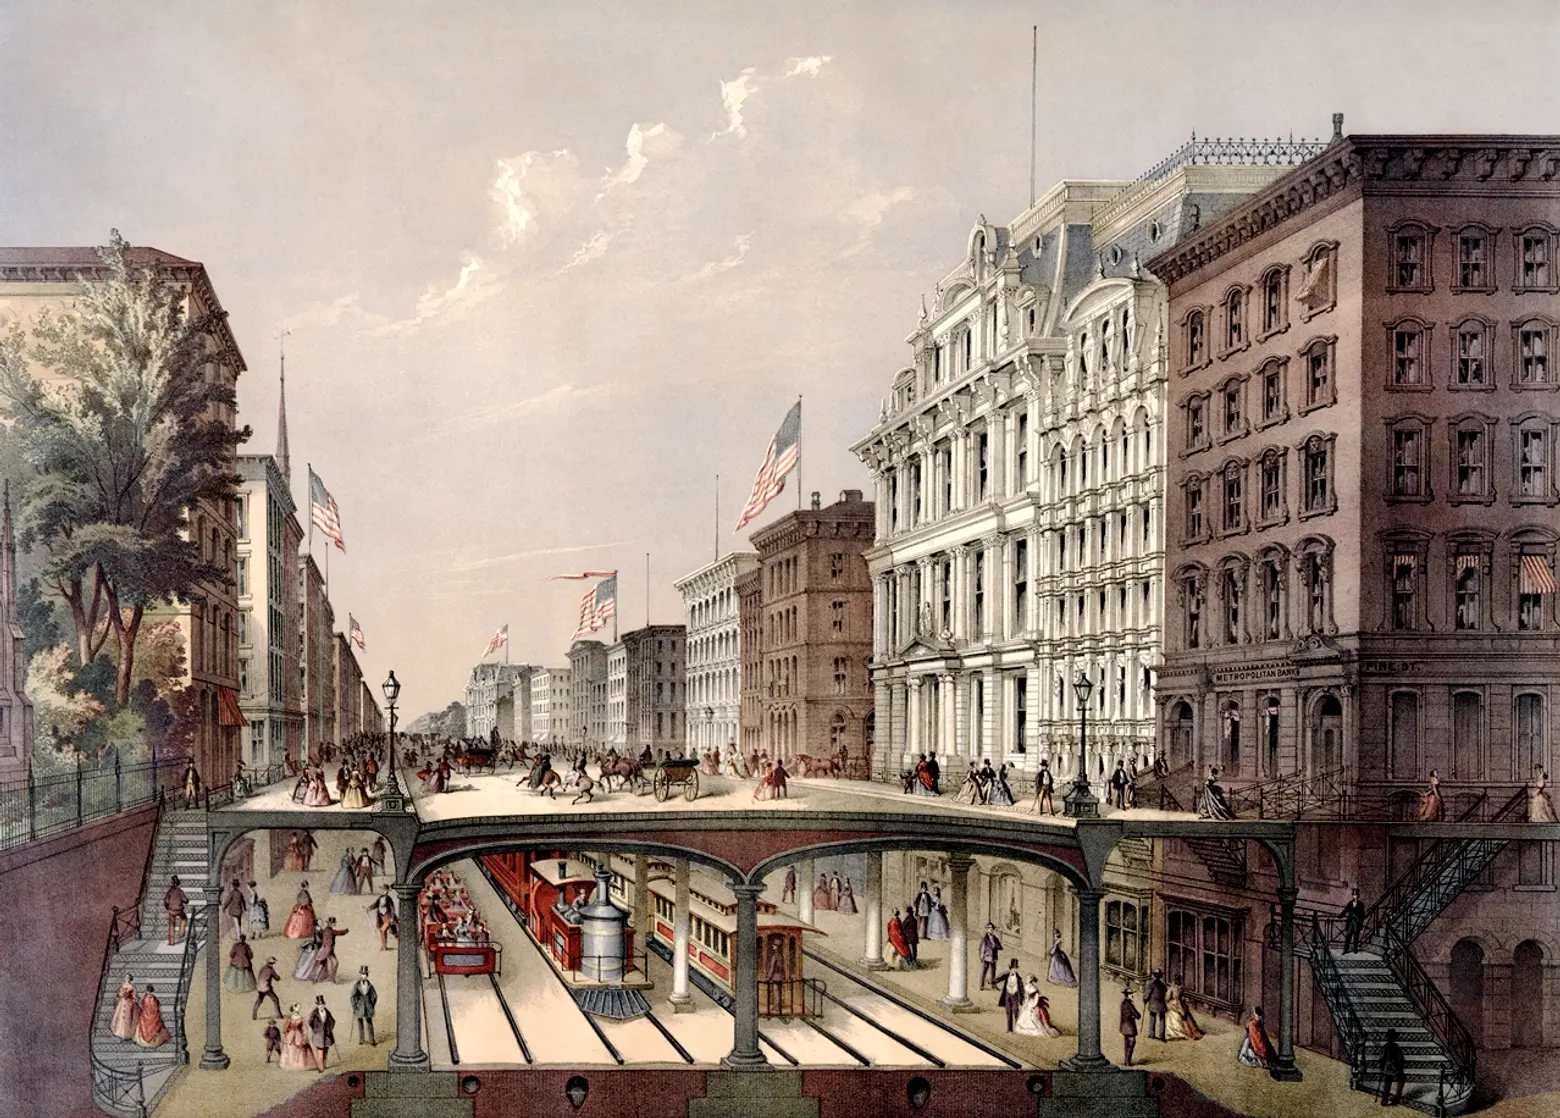 Proposed ‘arcade railway’ below Broadway would aid 1860s gridlock